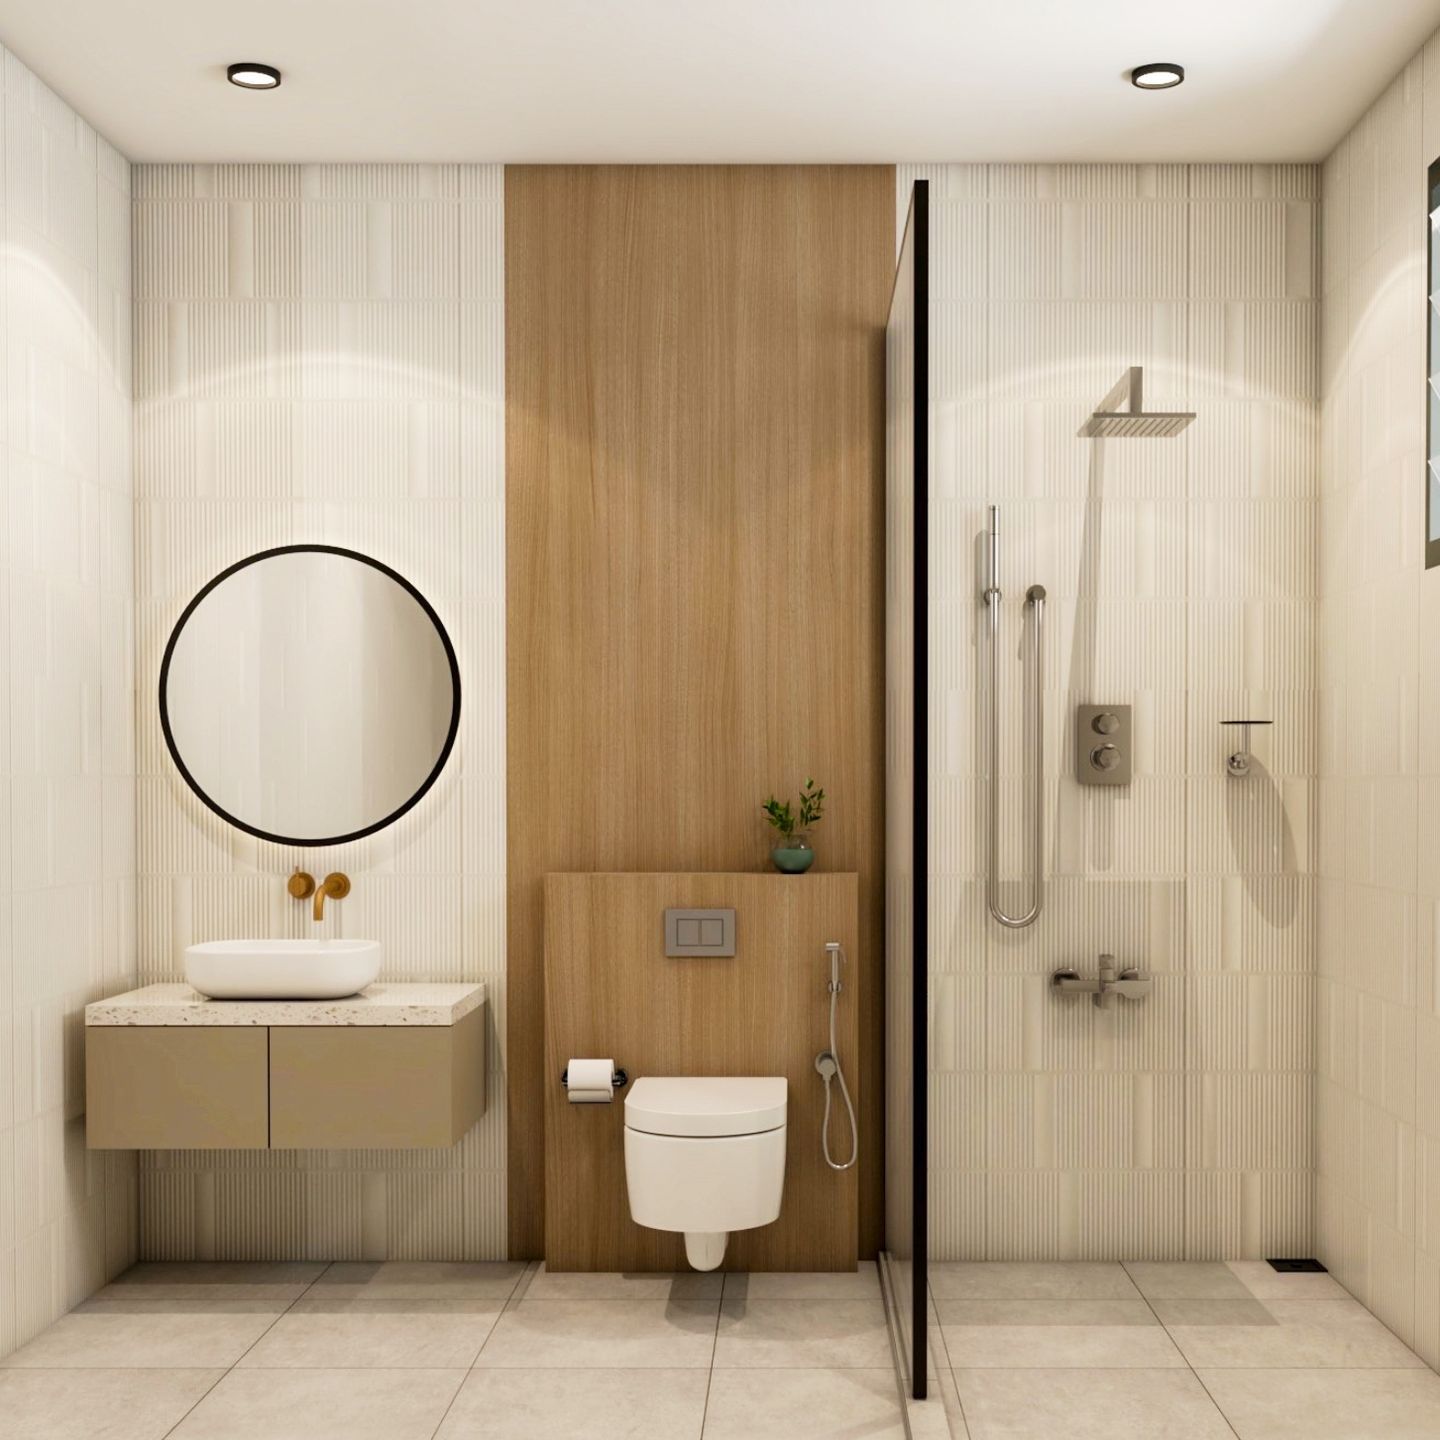 Beige And Wood Bathroom Design With Circular Mirror - Livspace